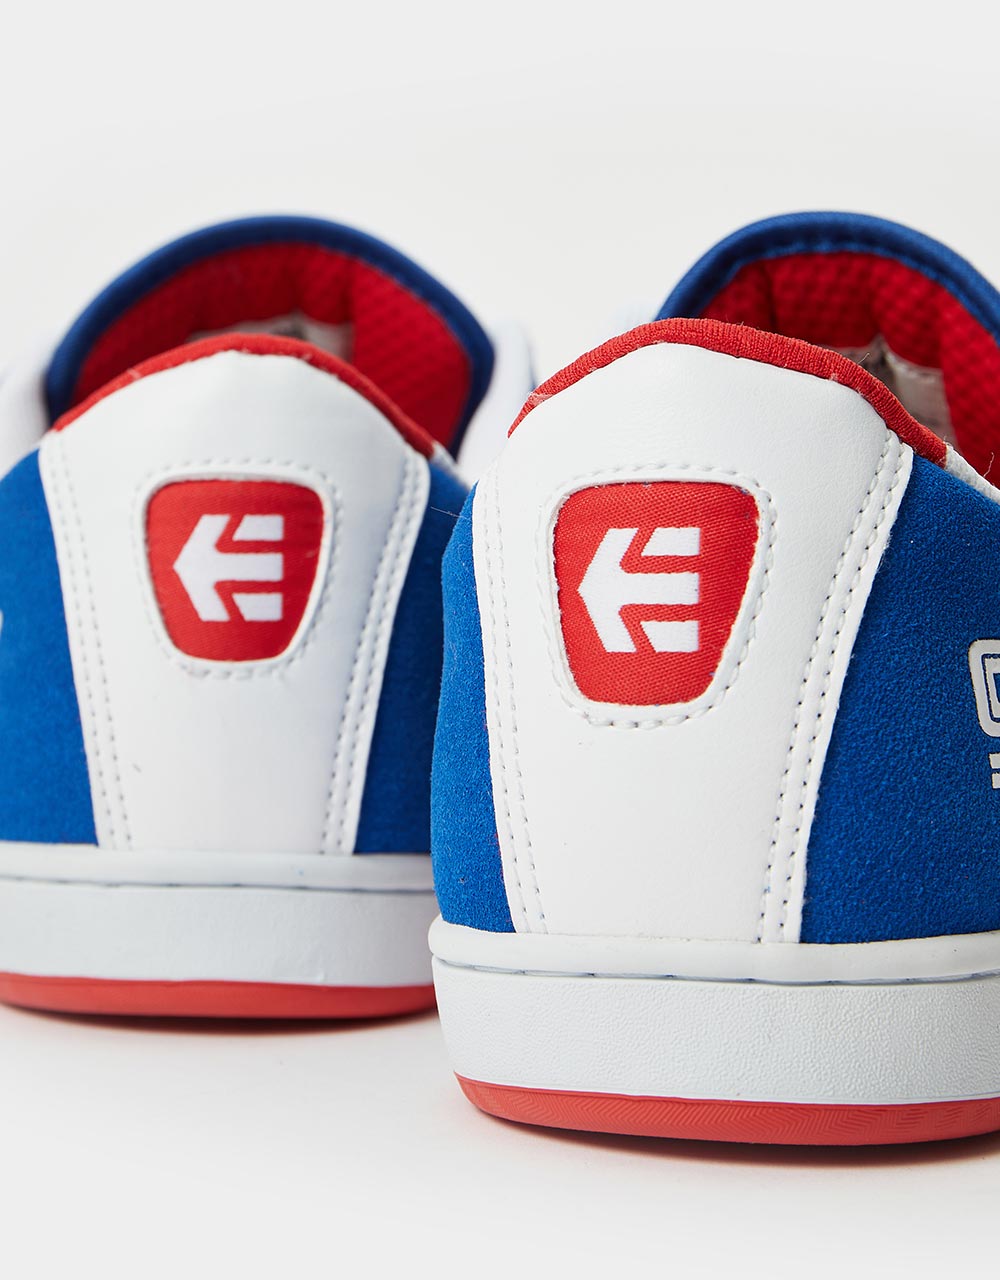 Etnies MC Rap Lo Skate Shoes - Blue/Red/White